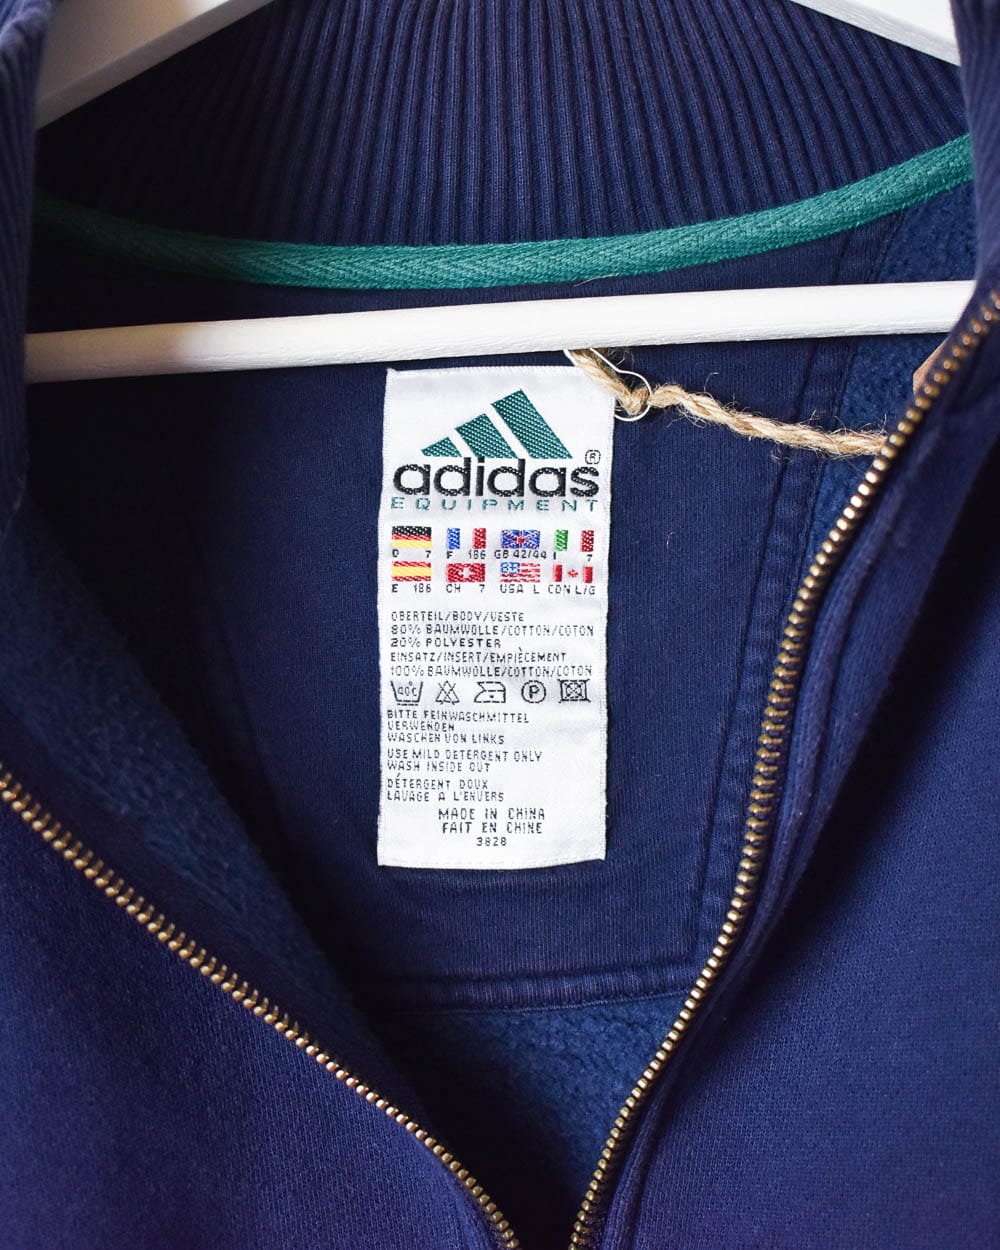 Adidas Equipment 1/4 Zip Sweatshirt - Large